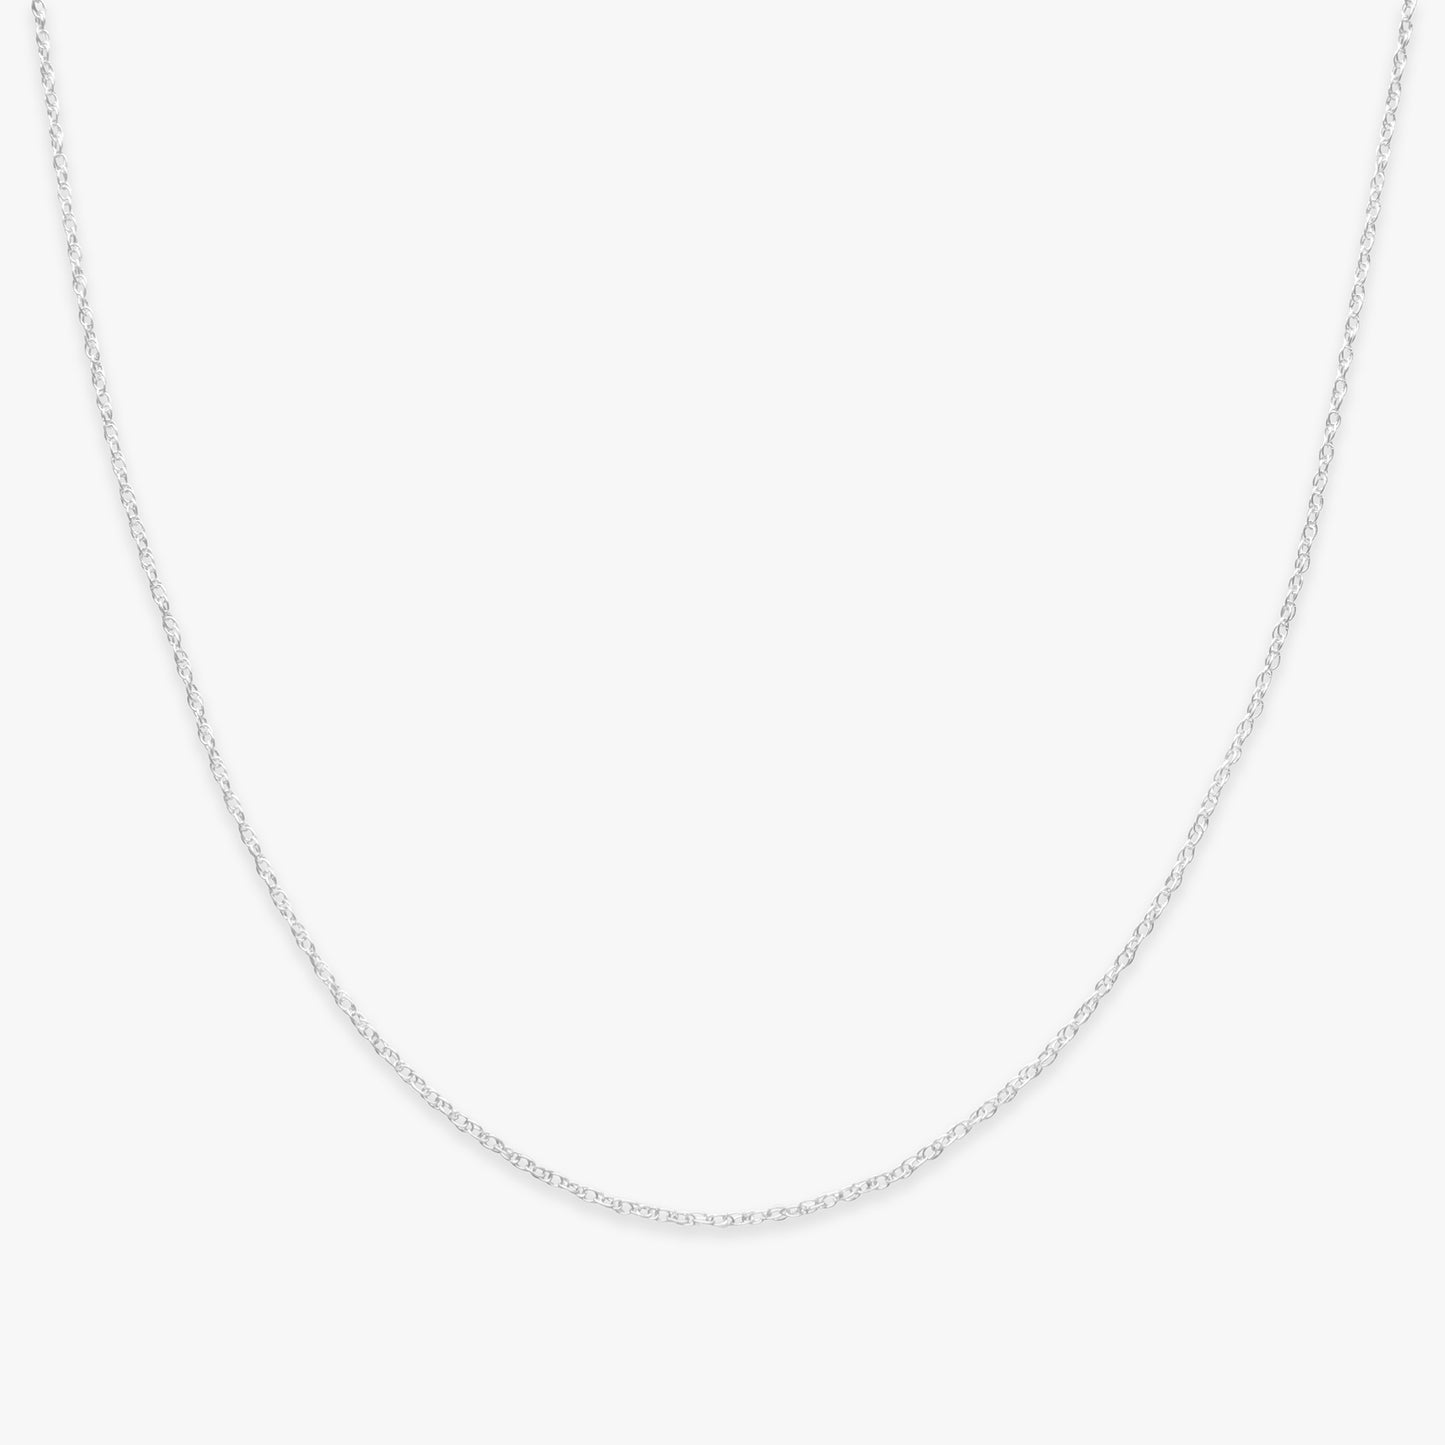 Basic twist chain necklace silver